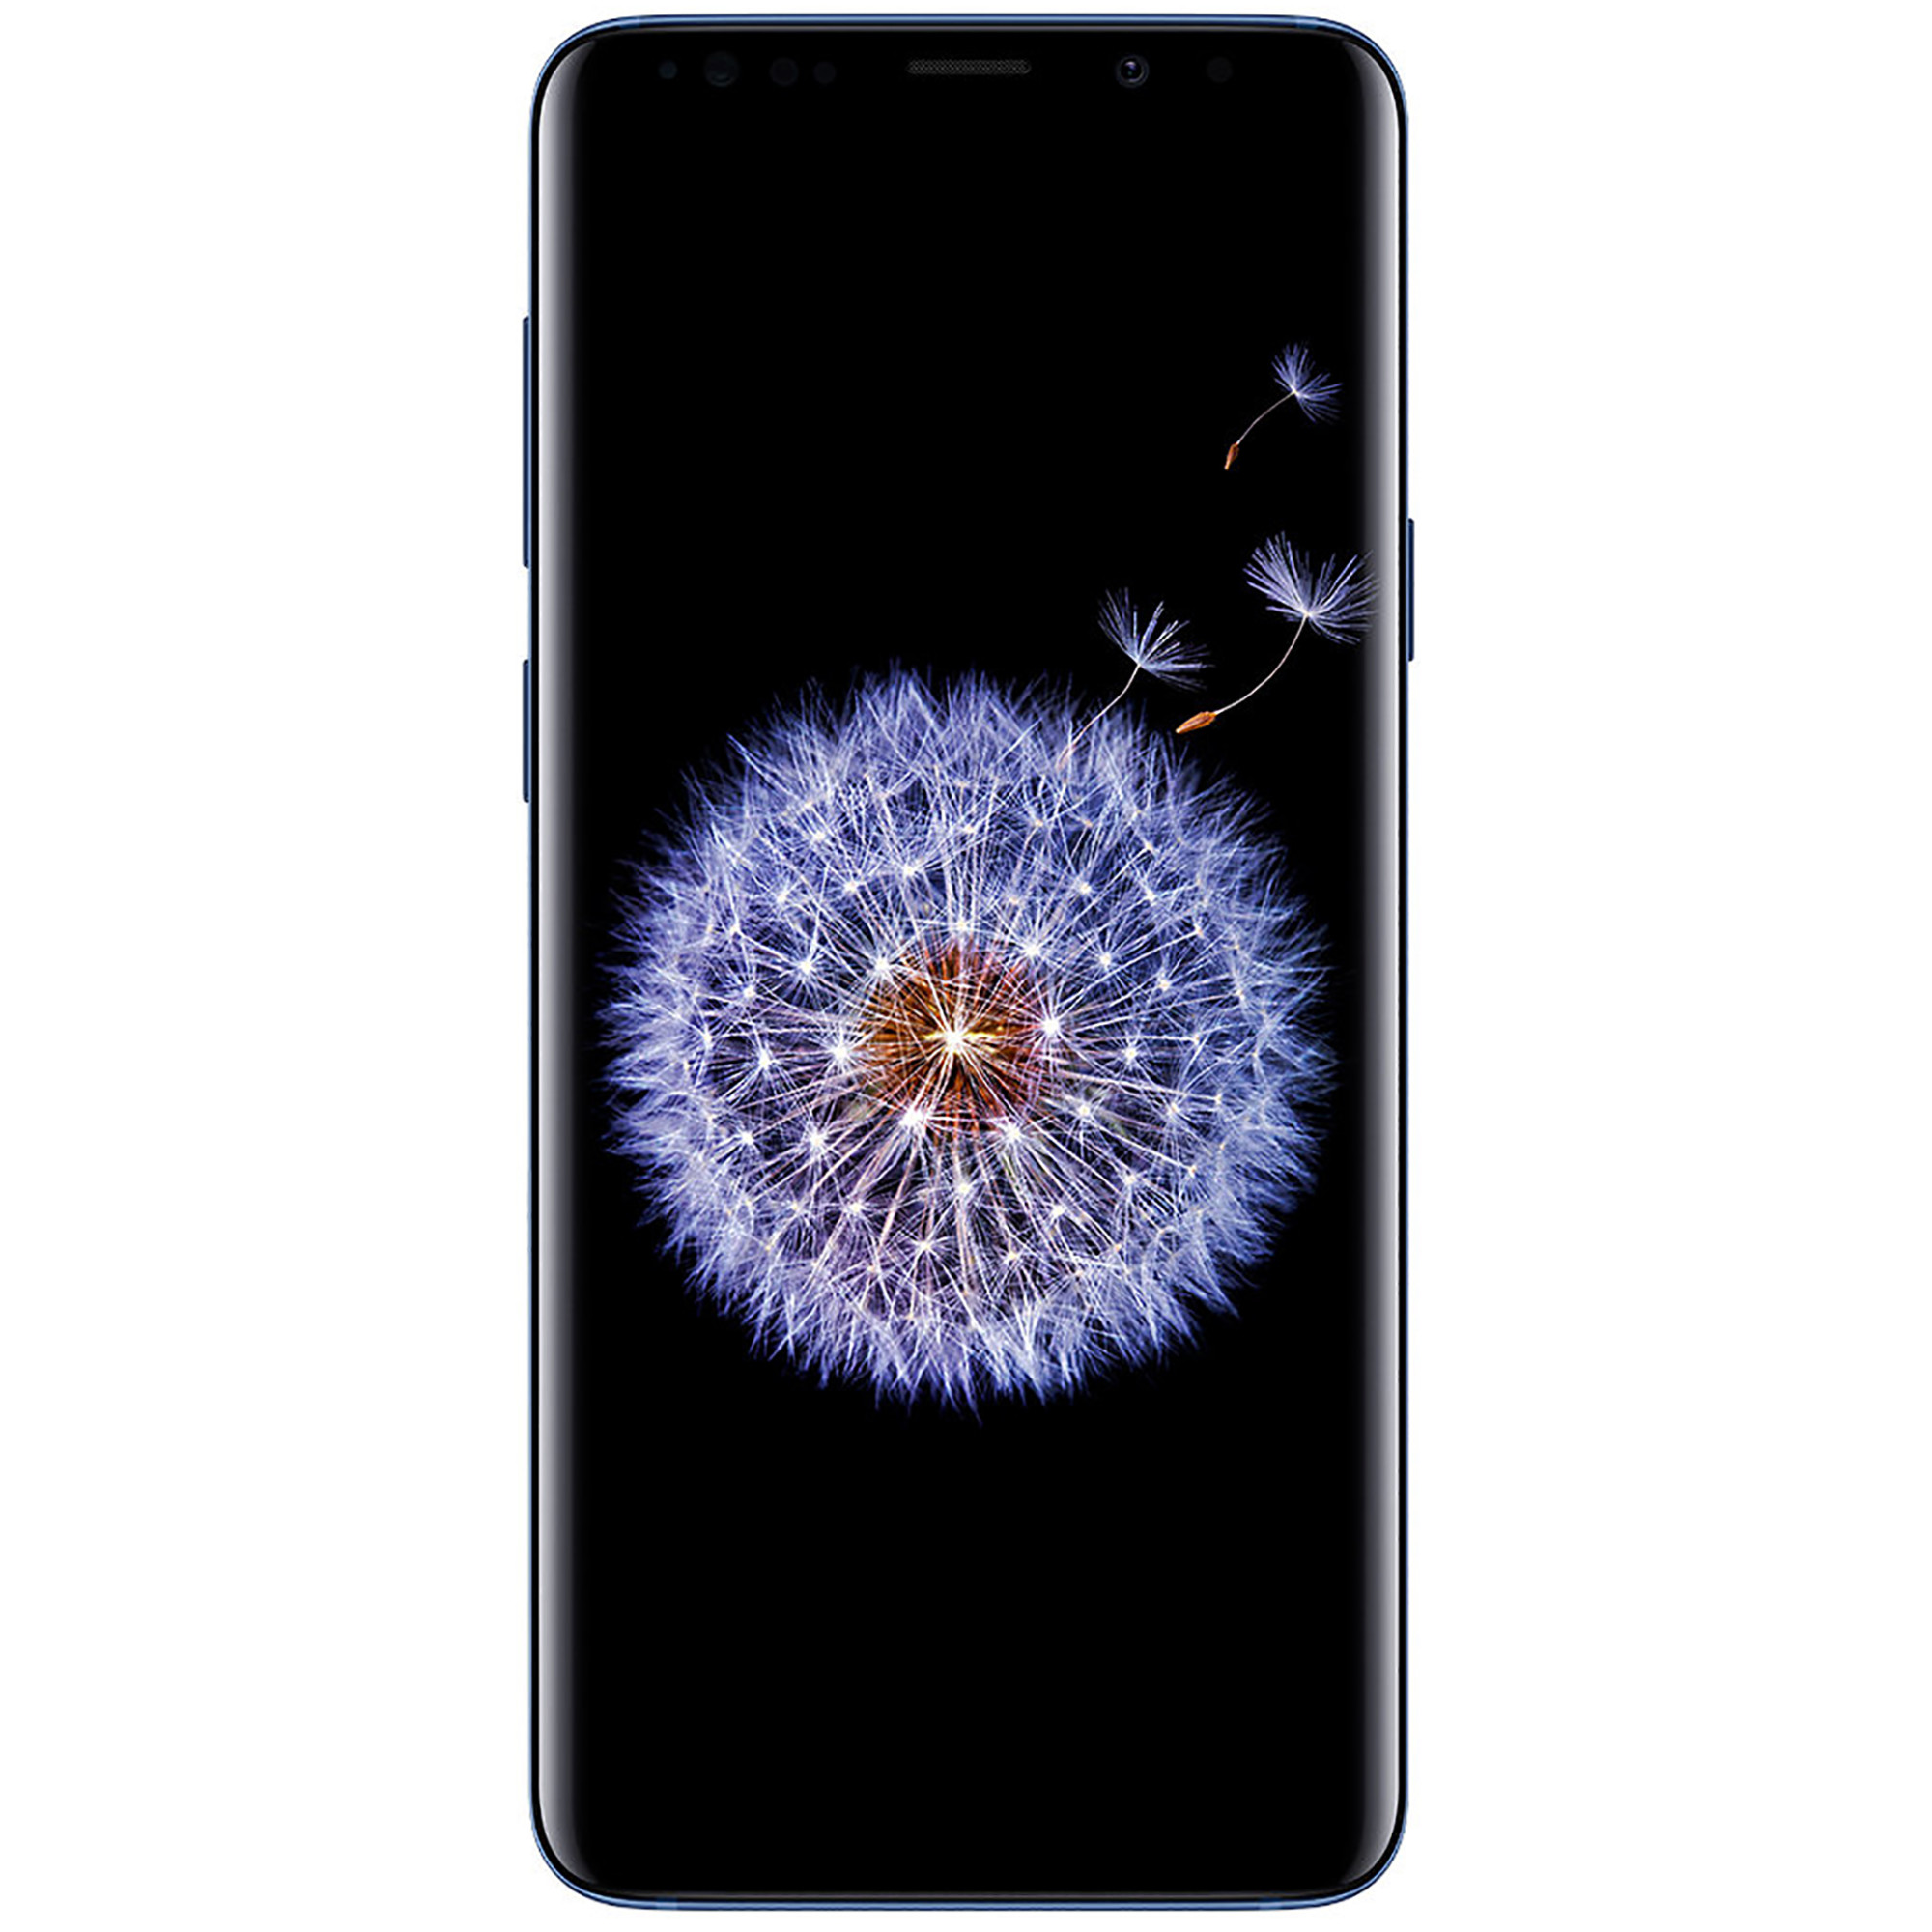 Samsung Galaxy S9+ G965U 64GB Unlocked GSM 4G LTE Phone w/ Dual 12MP Camera (USA Version) - Coral Blue - image 1 of 6